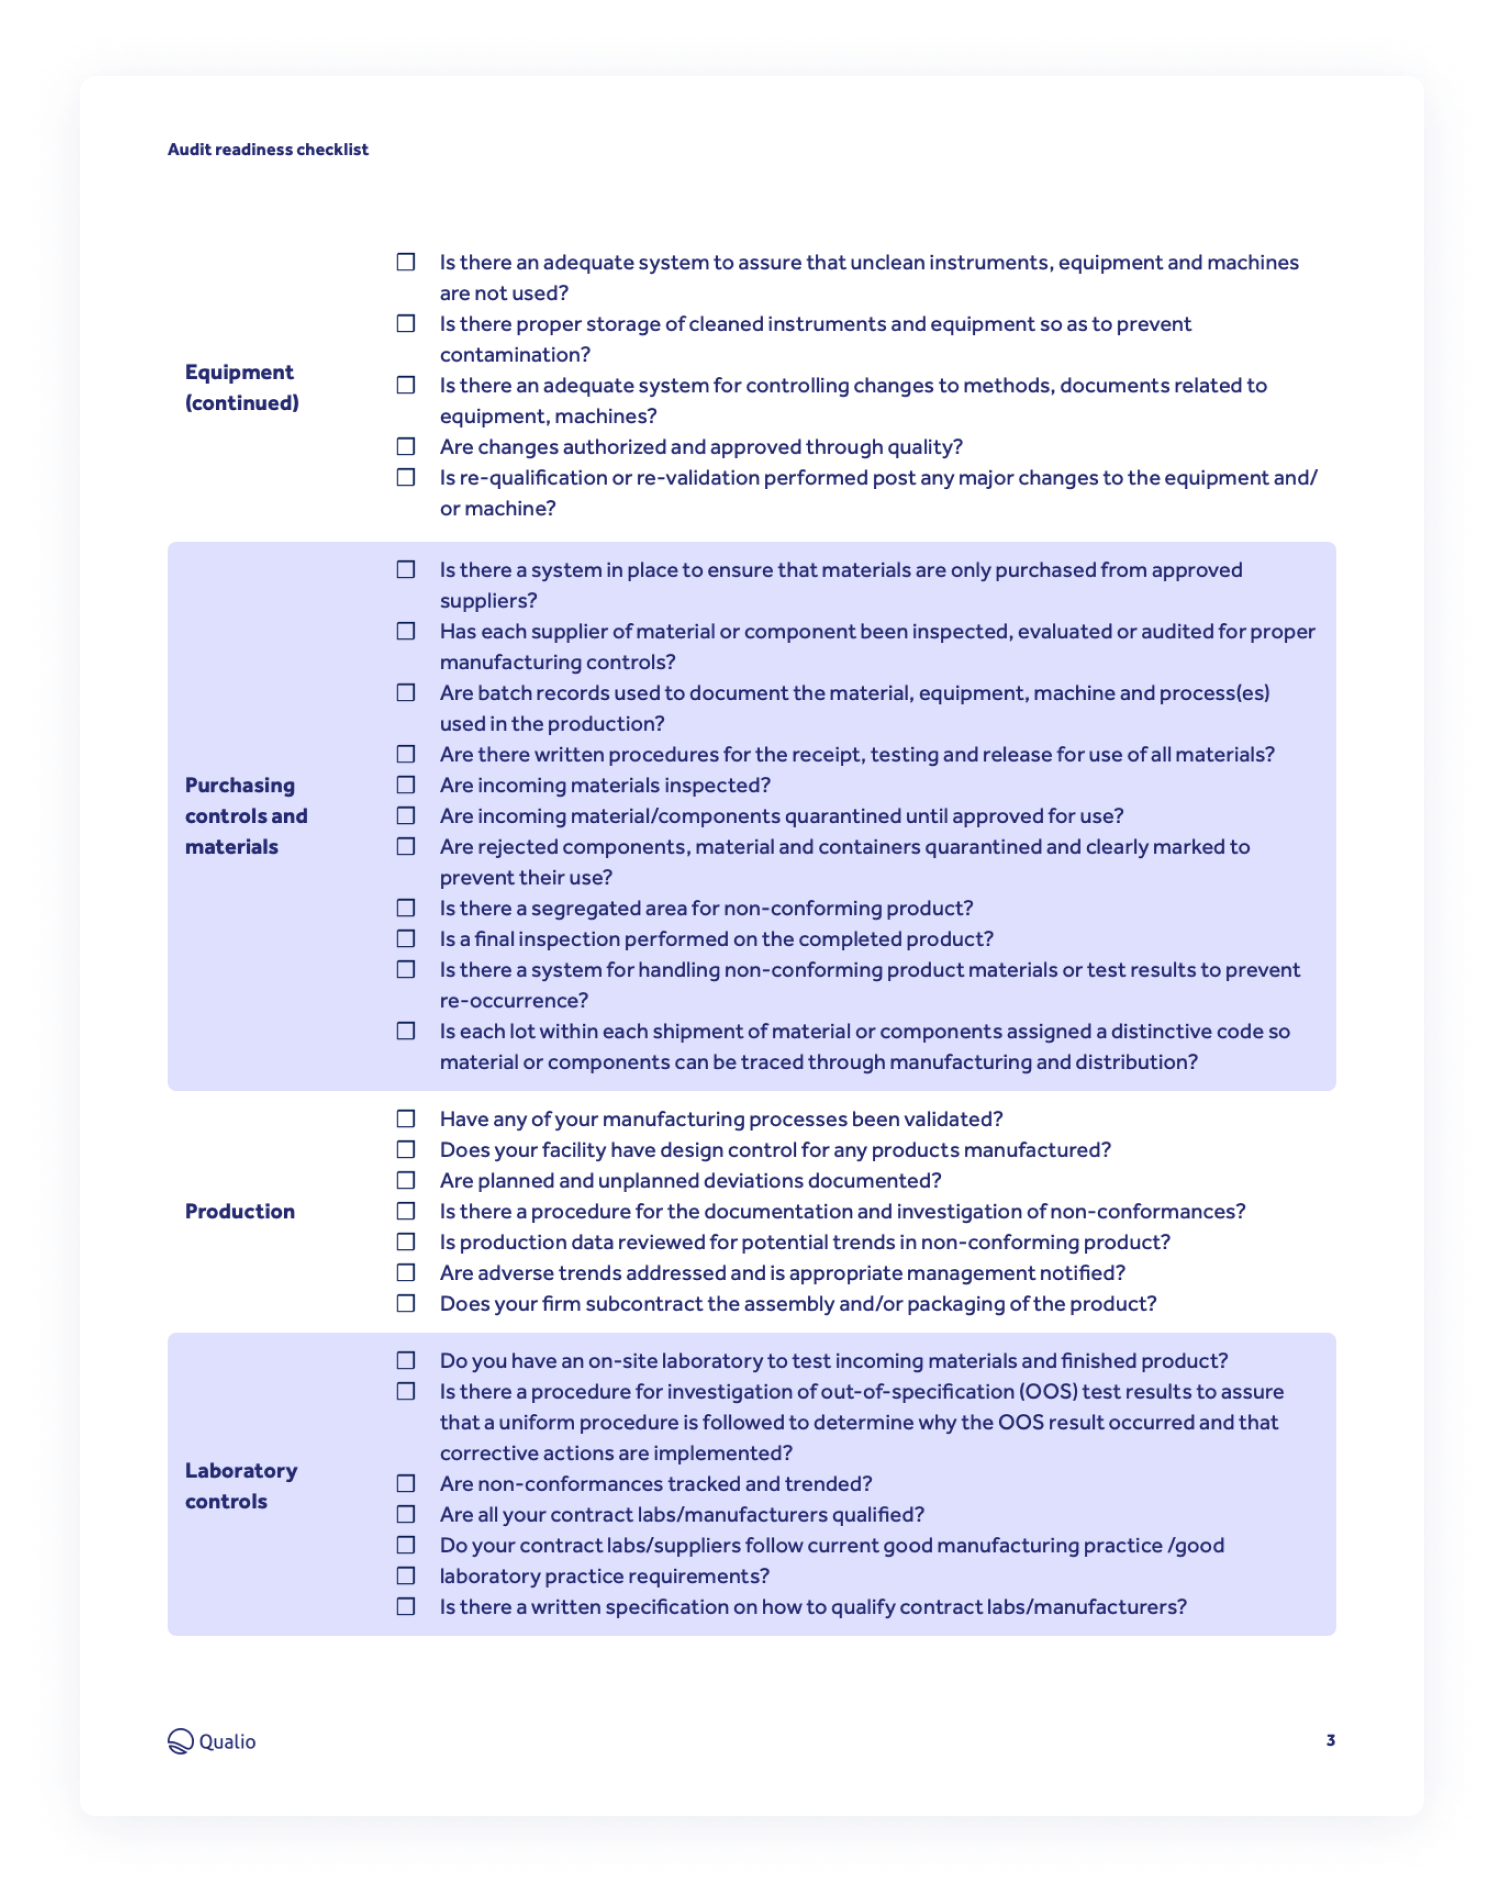 lp-image_audit-readiness-checklist_2